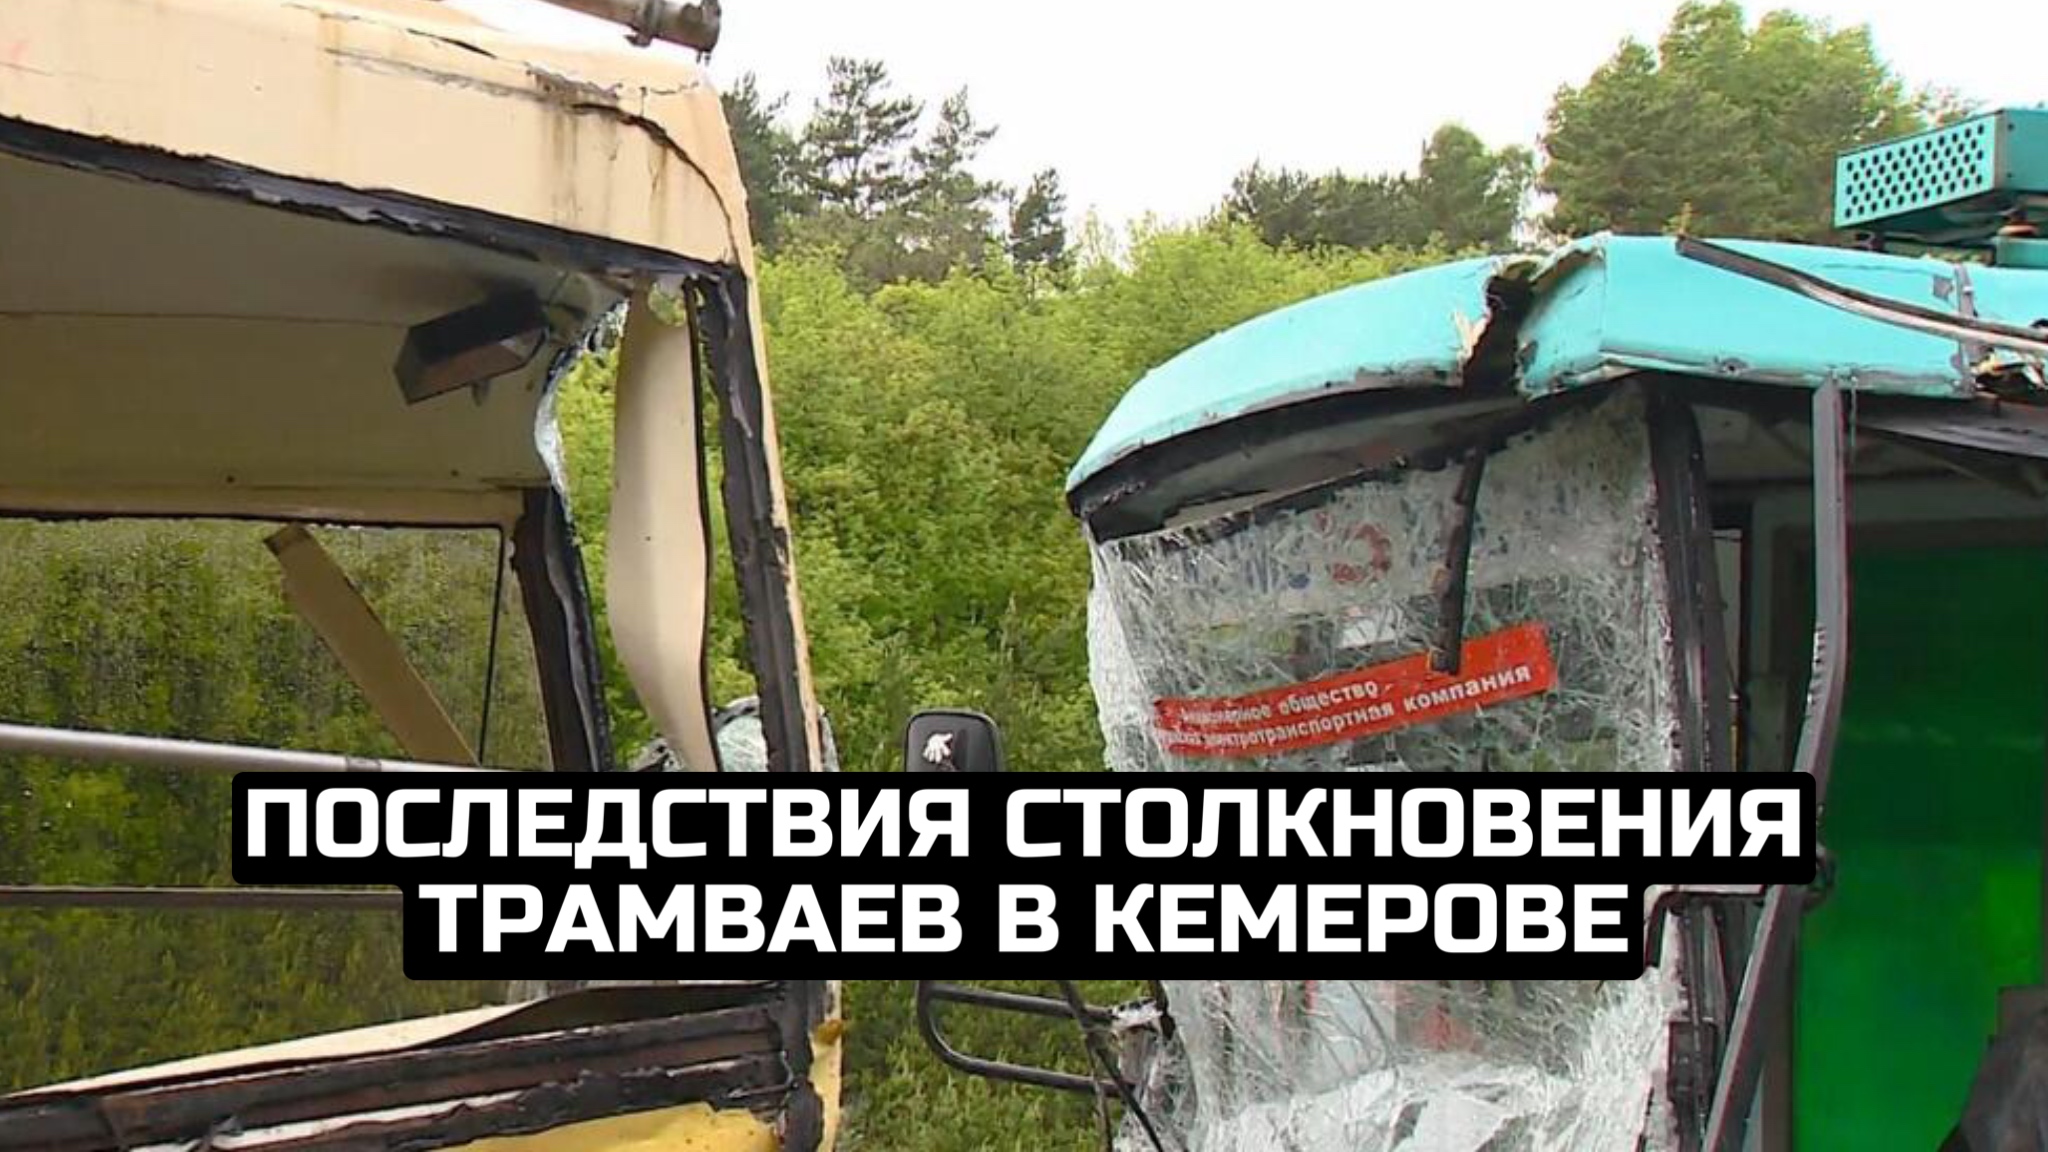 Последствия столкновения трамваев в Кемерове